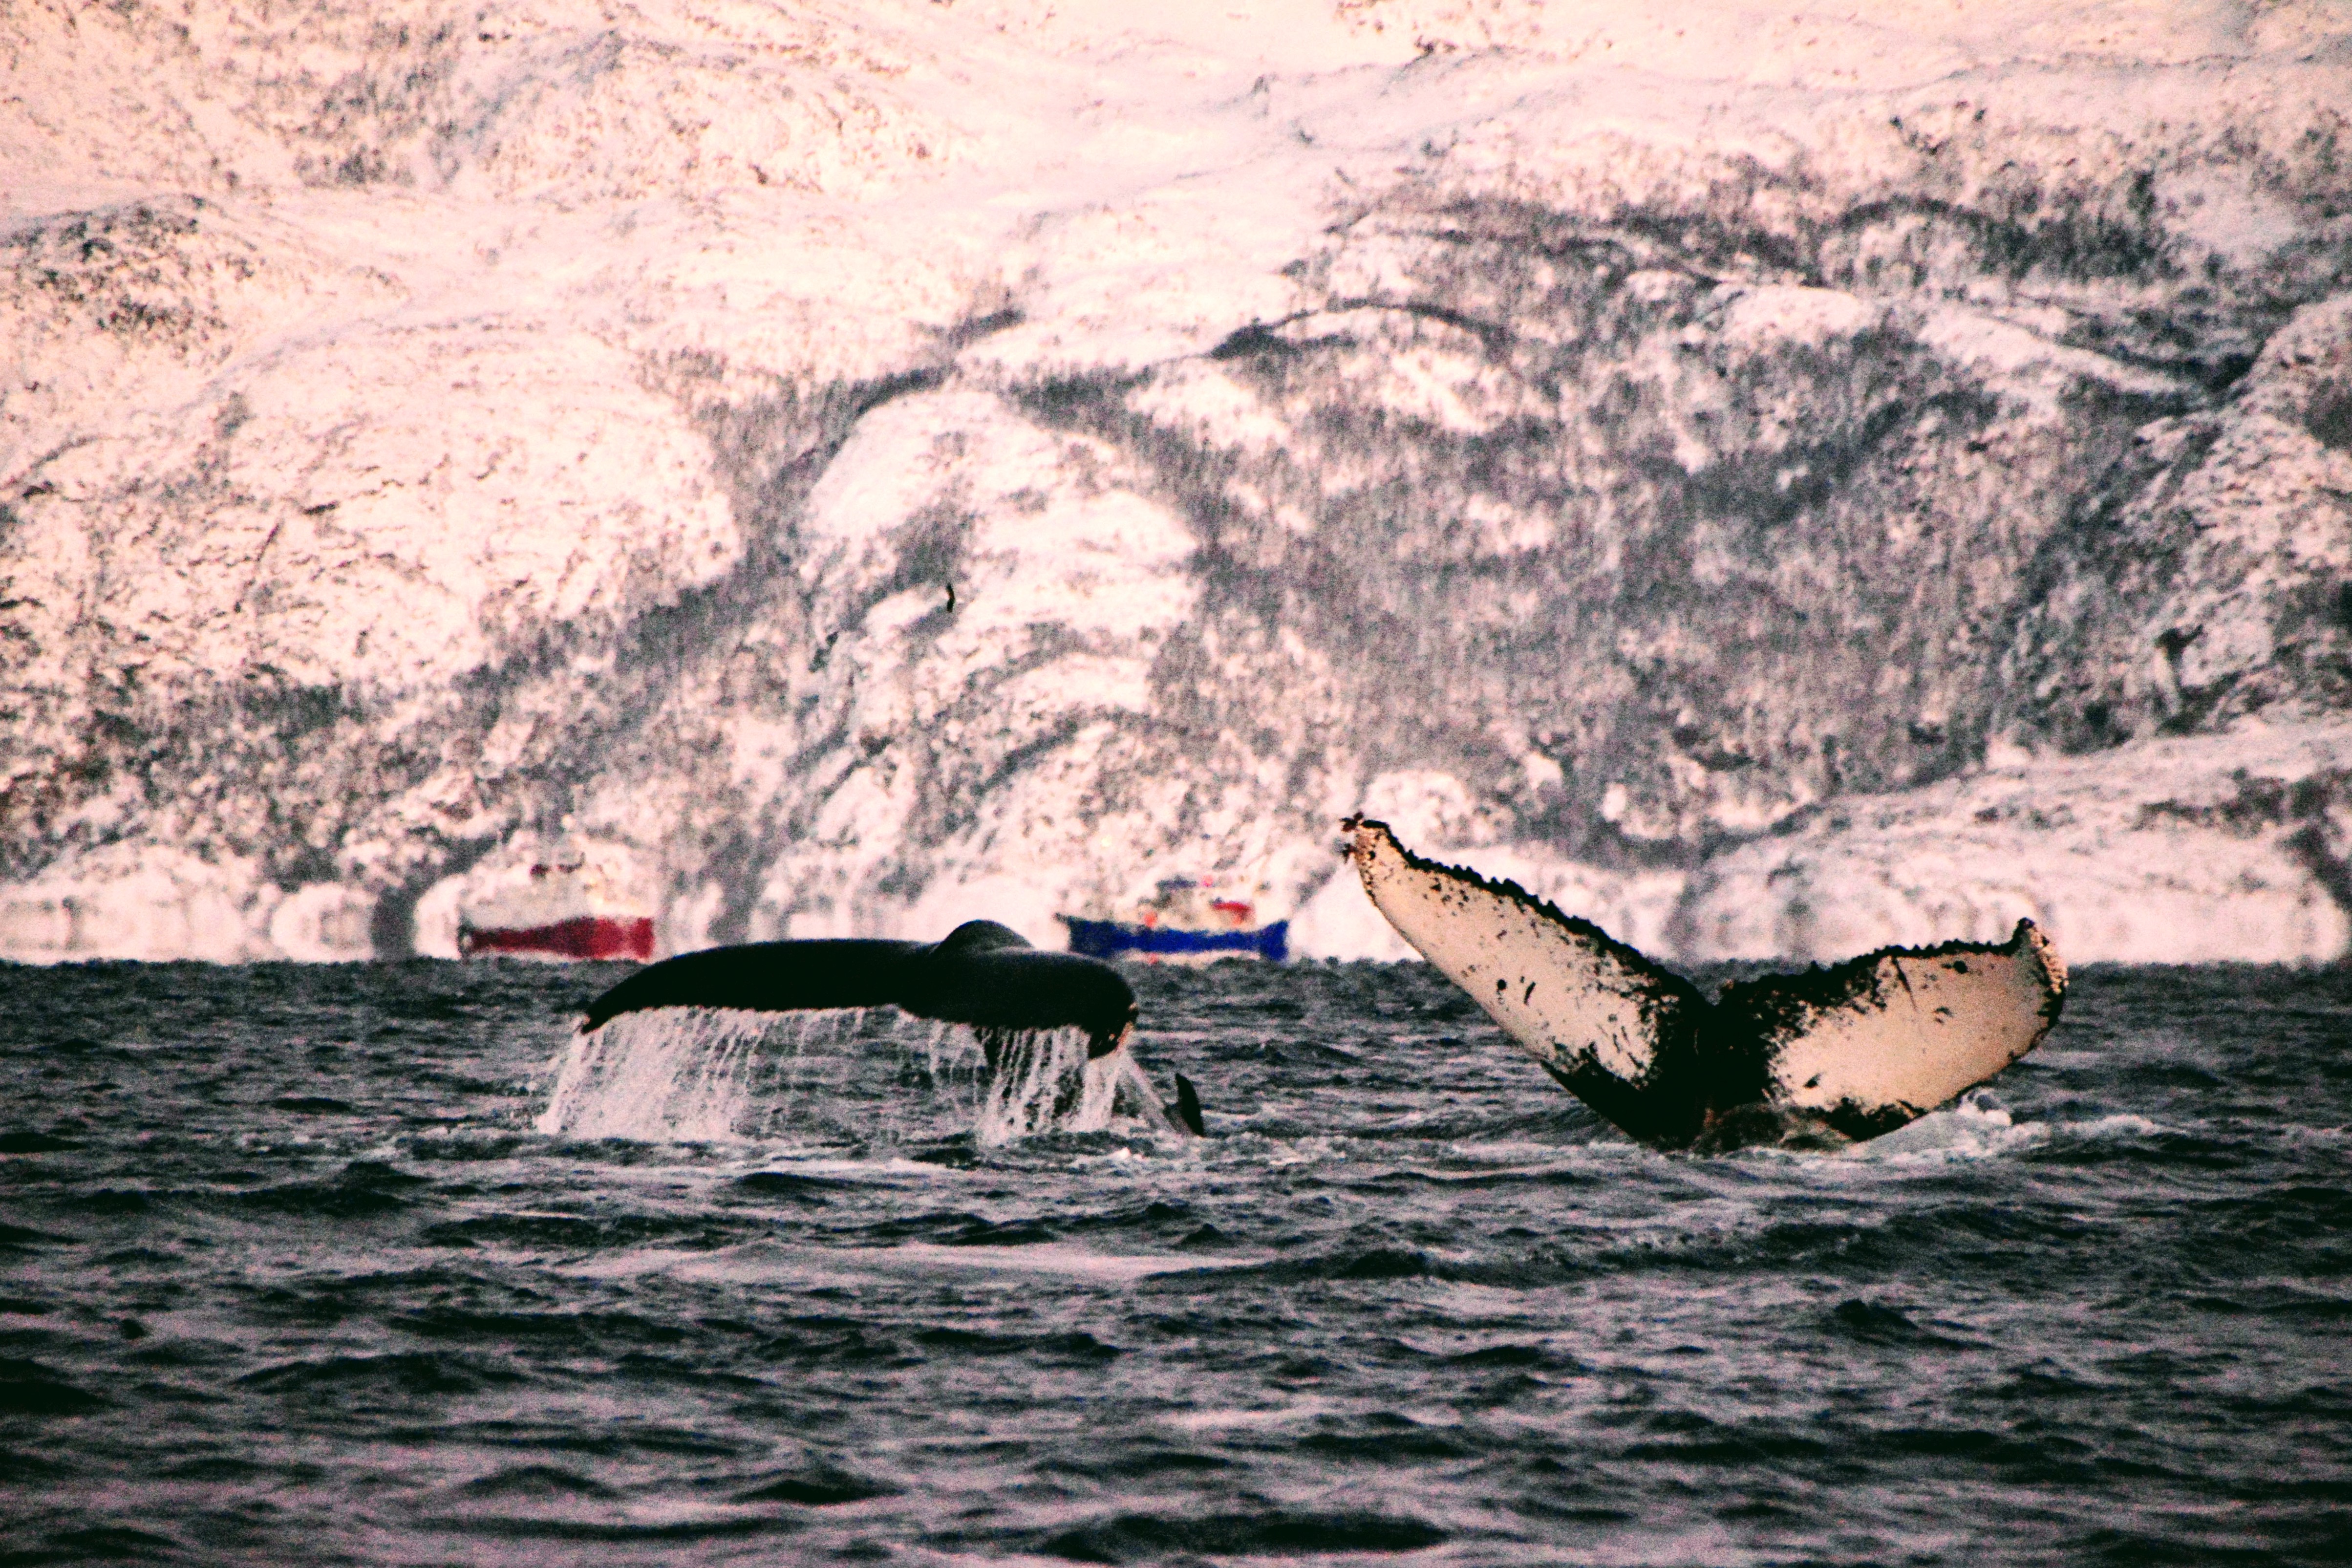 Orcas and humpbacks